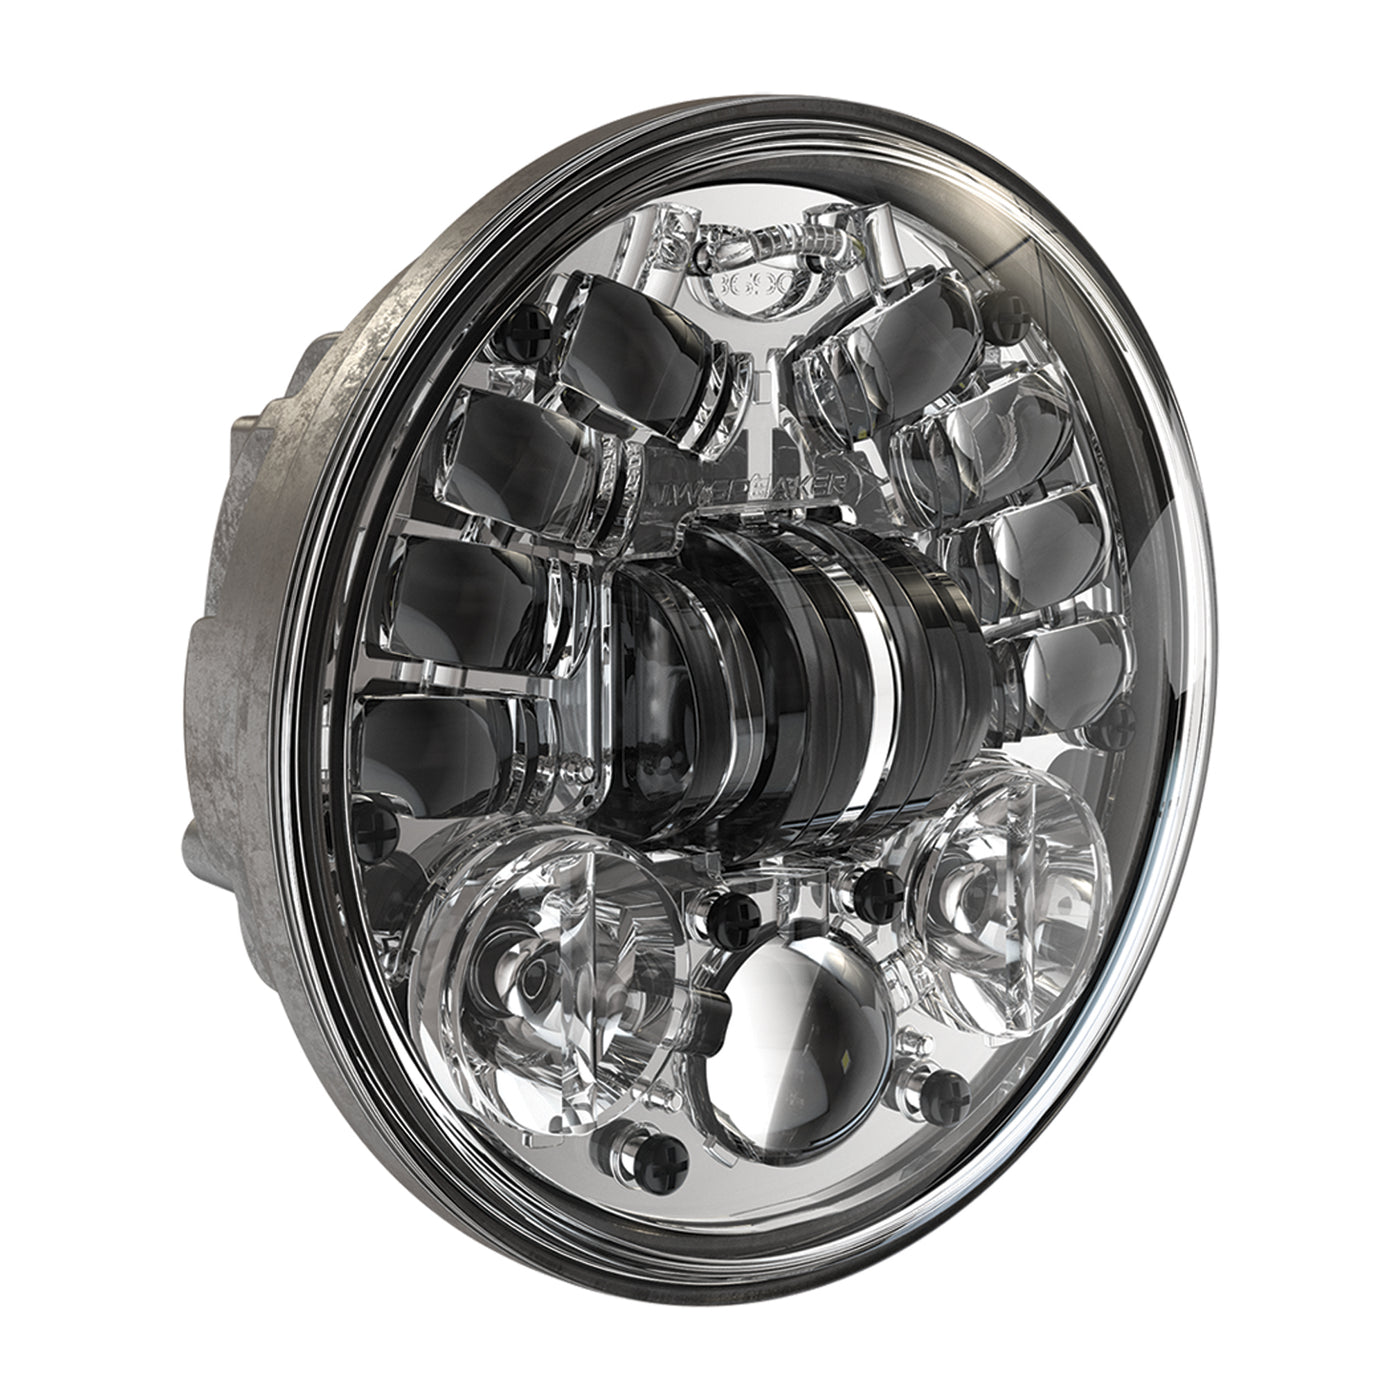 8690a2 Adaptive Headlight 5.75" Chr Bezel